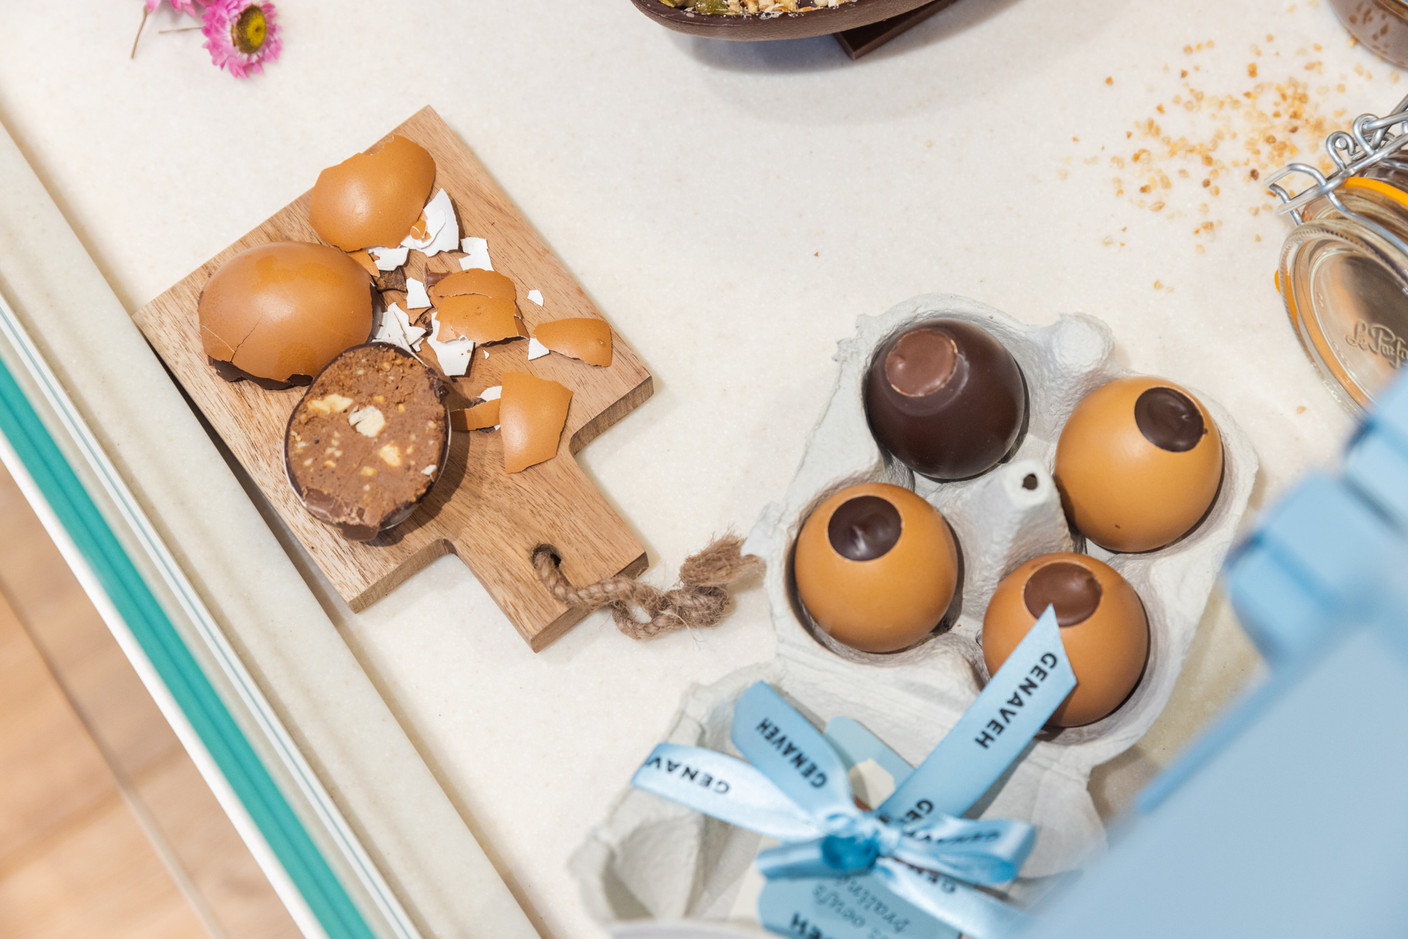 Genaveh’s praline eggs are a delicious chocolate surprise. Photo: Romain Gamba/Maison Moderne